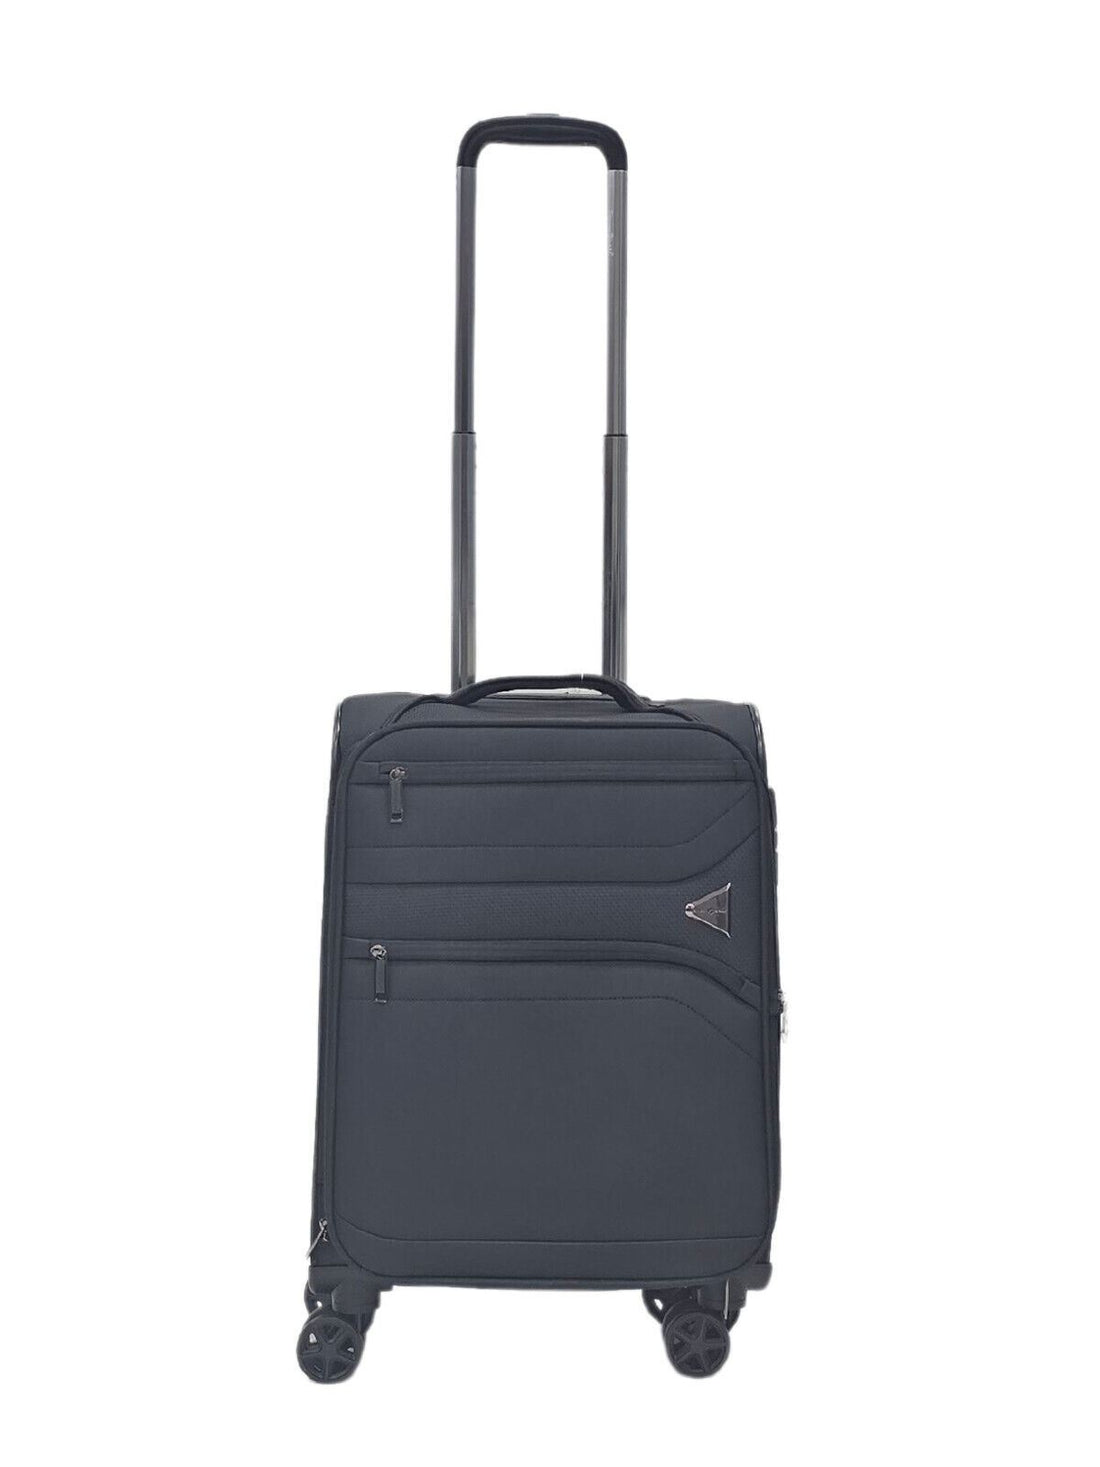 Lightweight Black Suitcases 8 Wheel Luggage Travel Holiday Bag